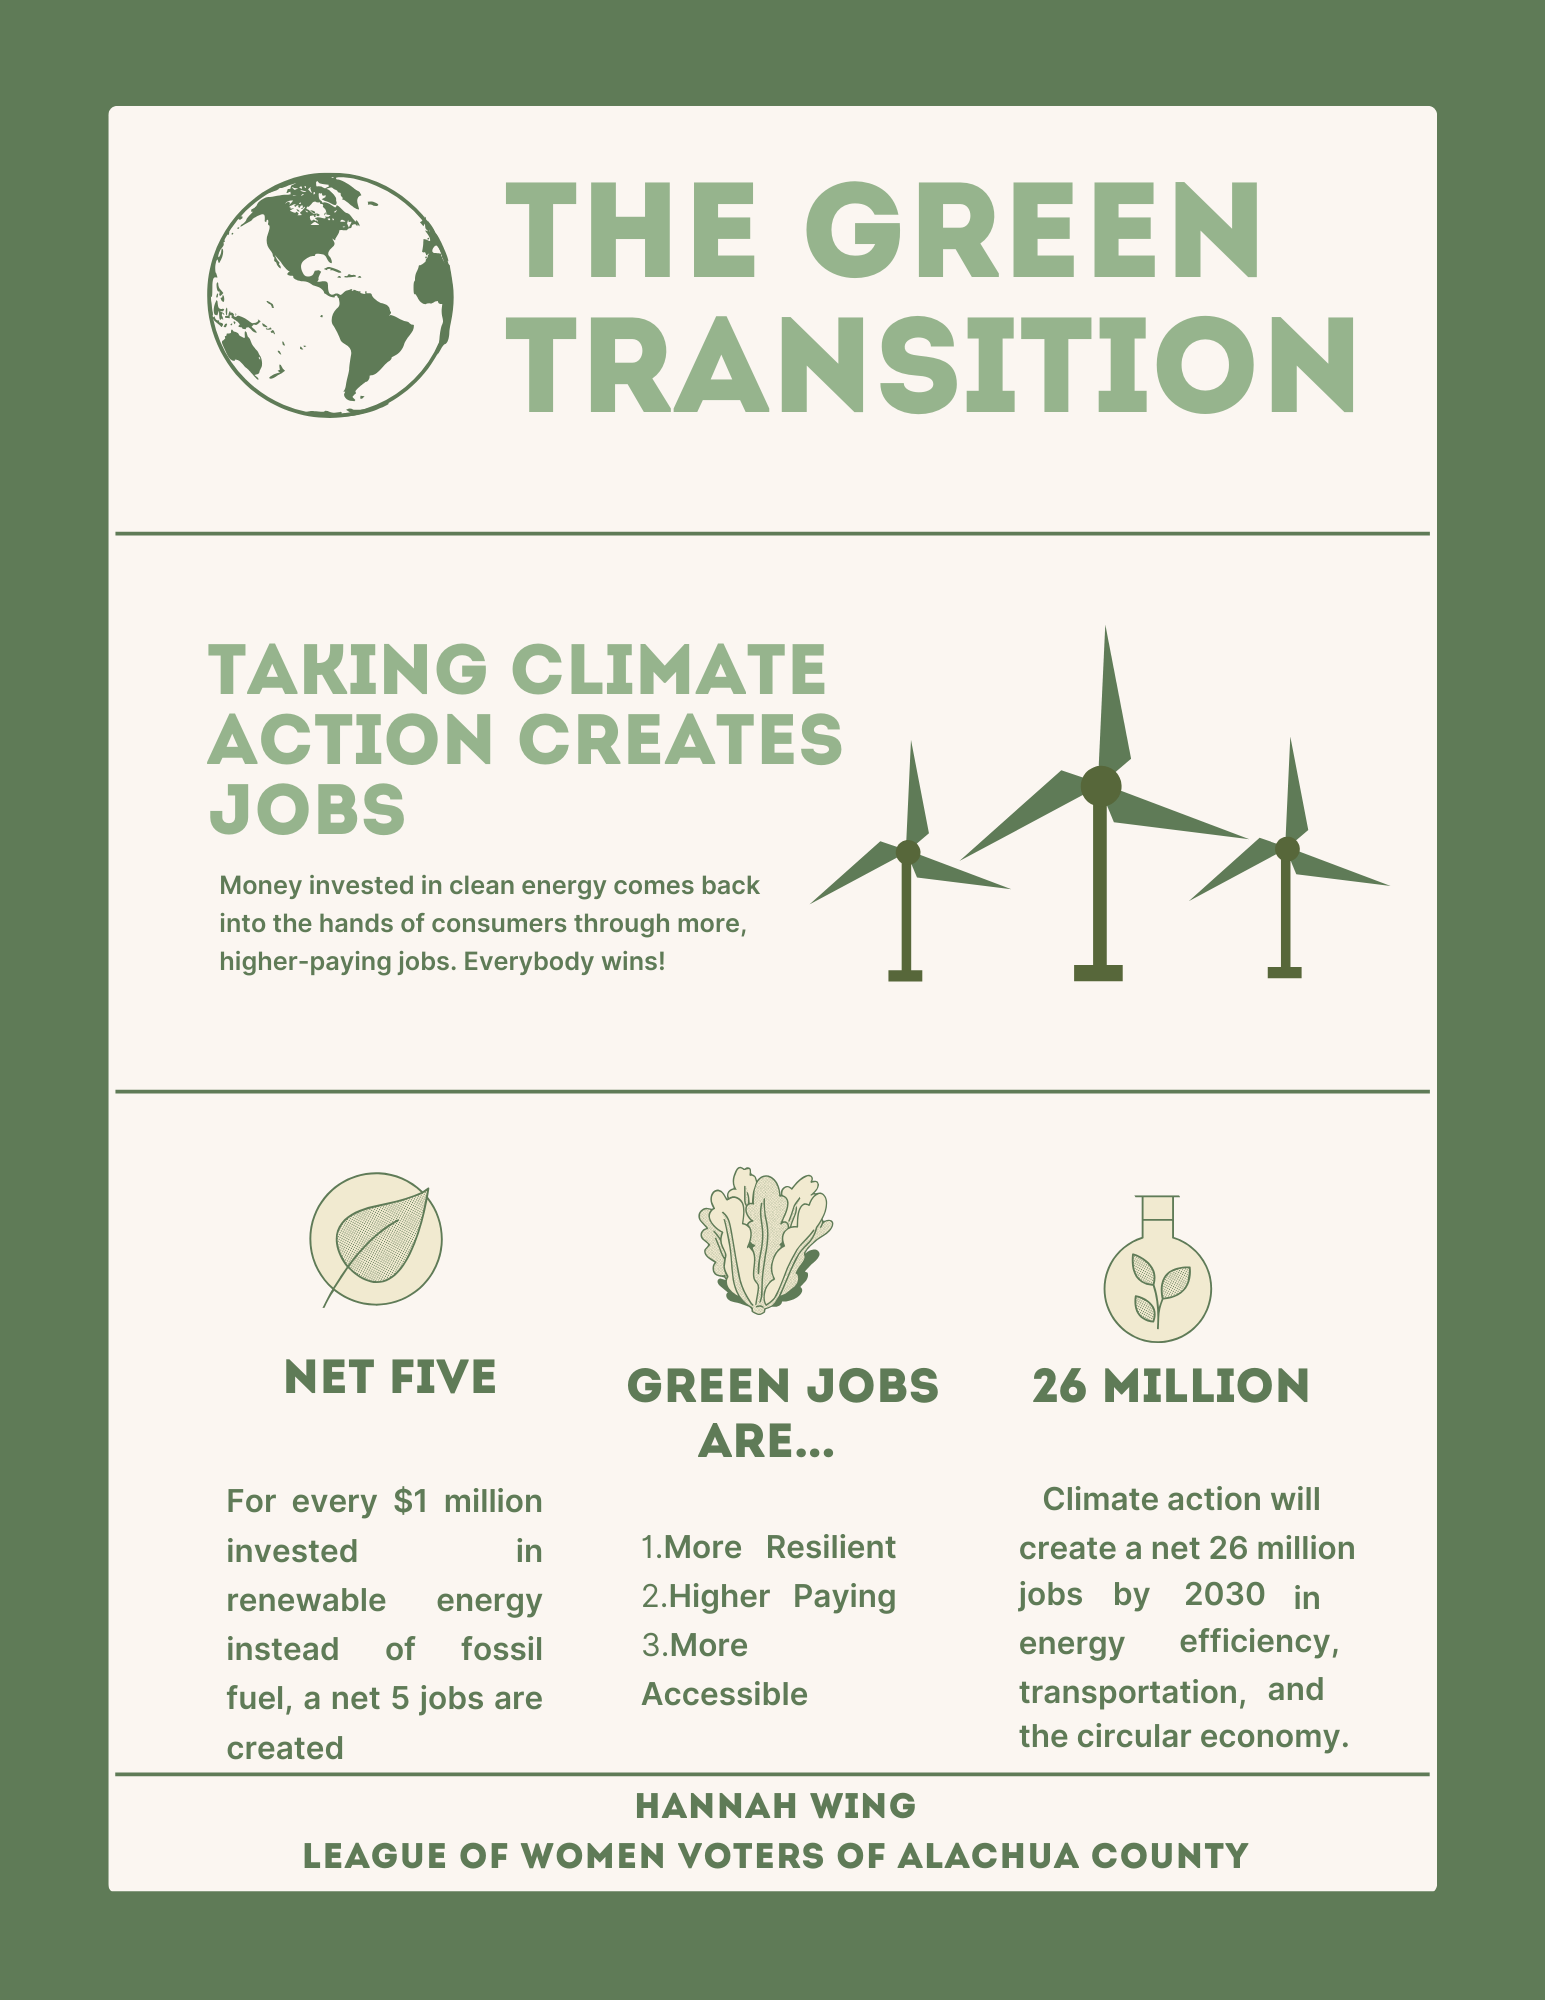 Infographic summarizing the green transition